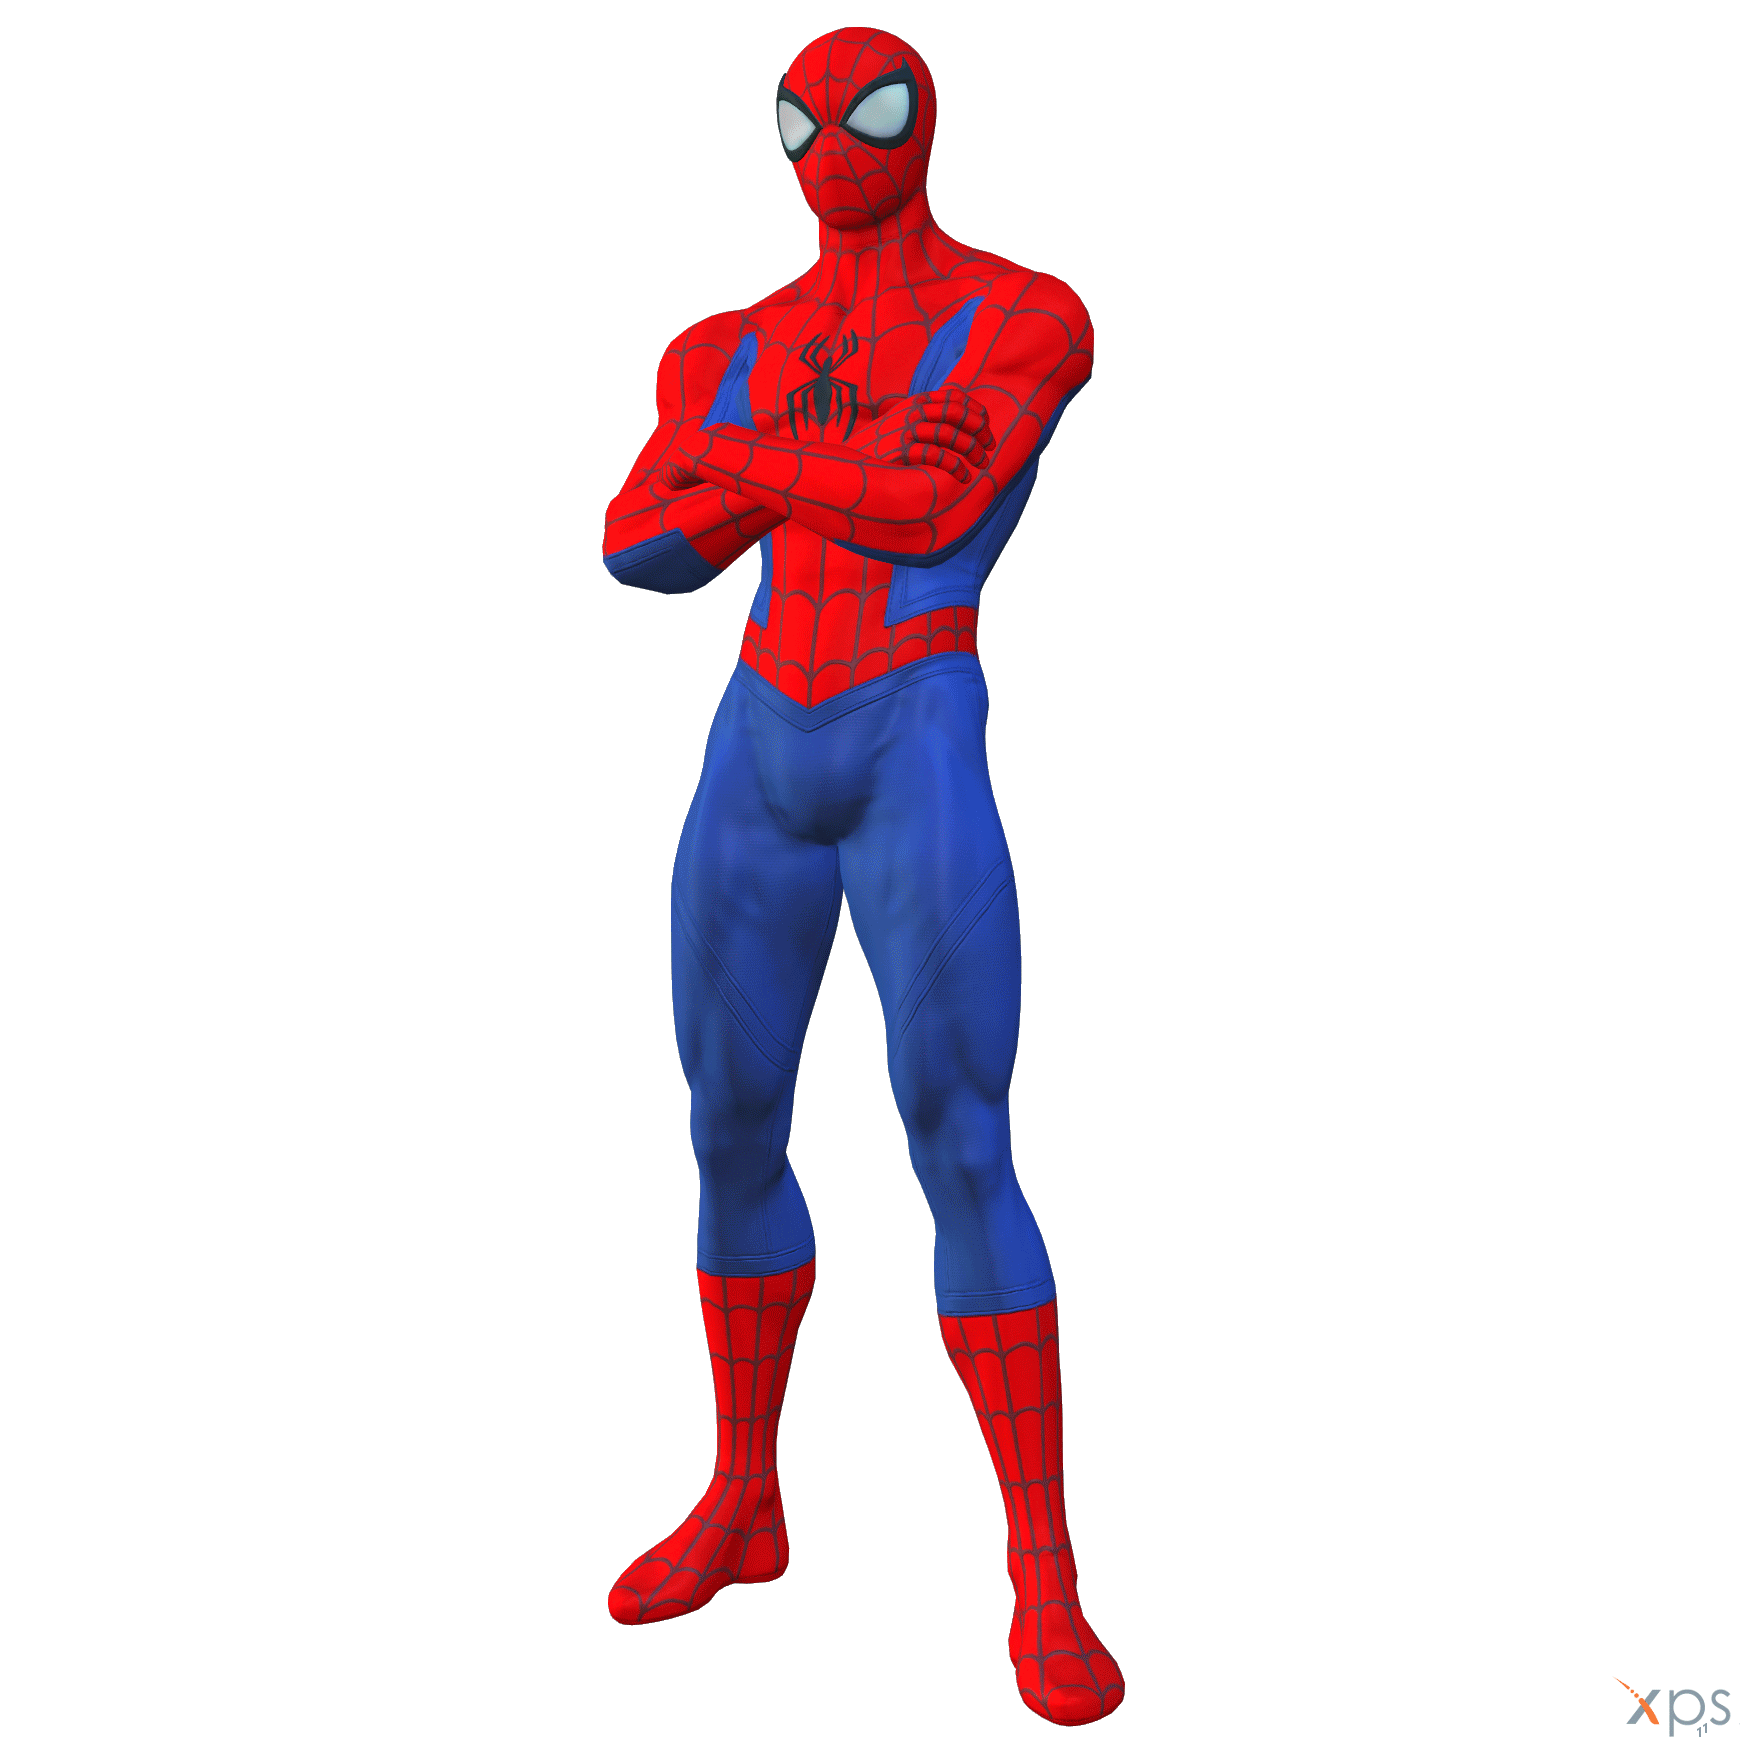 Fortnite - Spider-Man by MrUncleBingo on DeviantArt